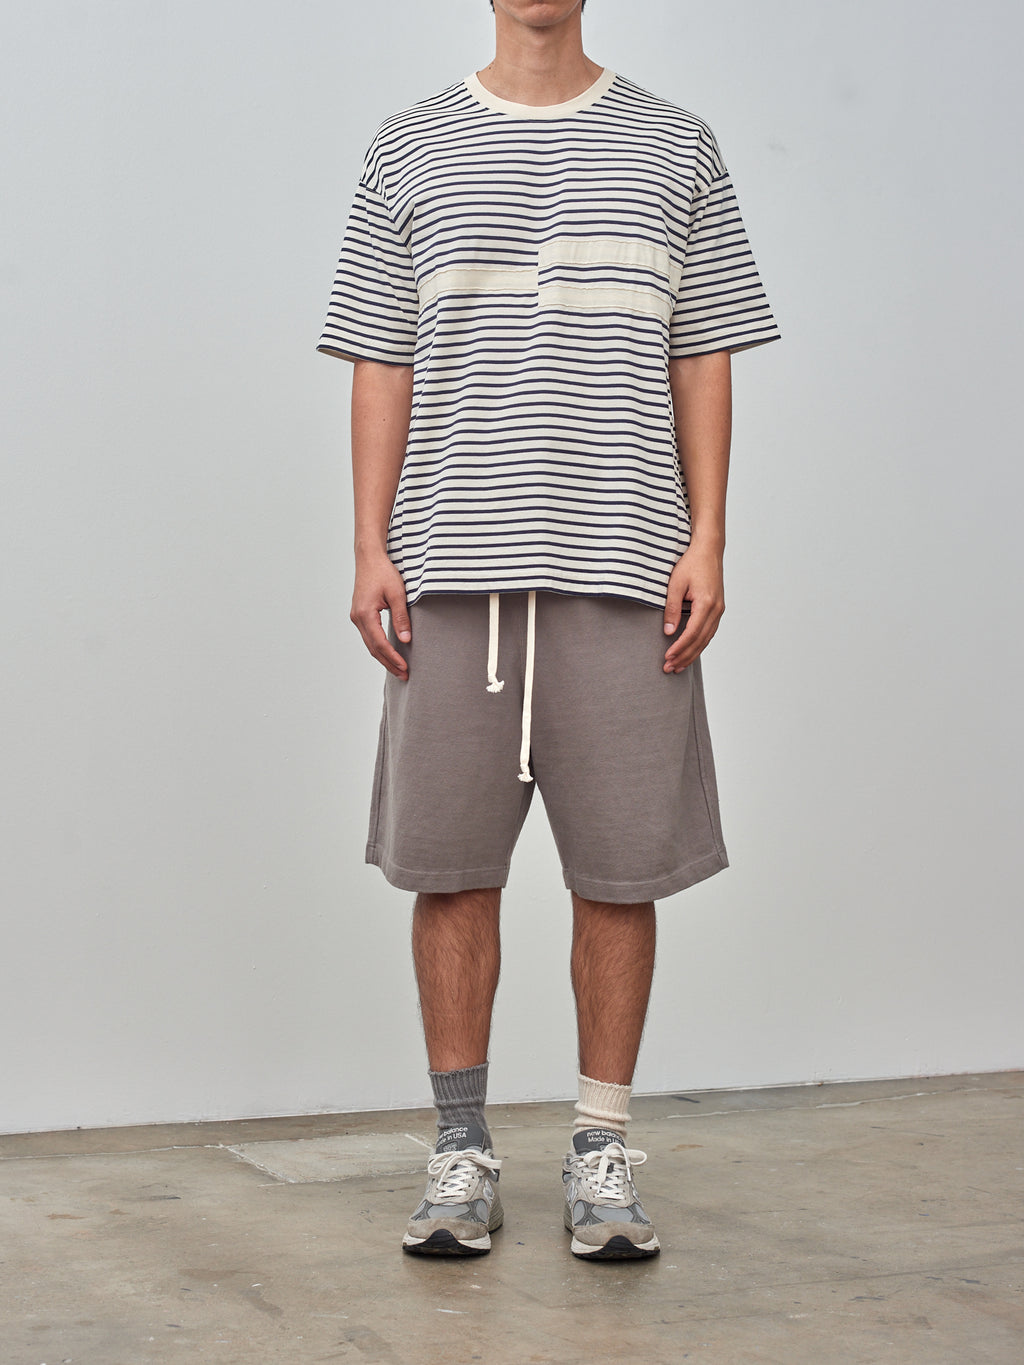 Namu Shop - ts(s) Horizontal Stripe Line T-Shirt - Natural